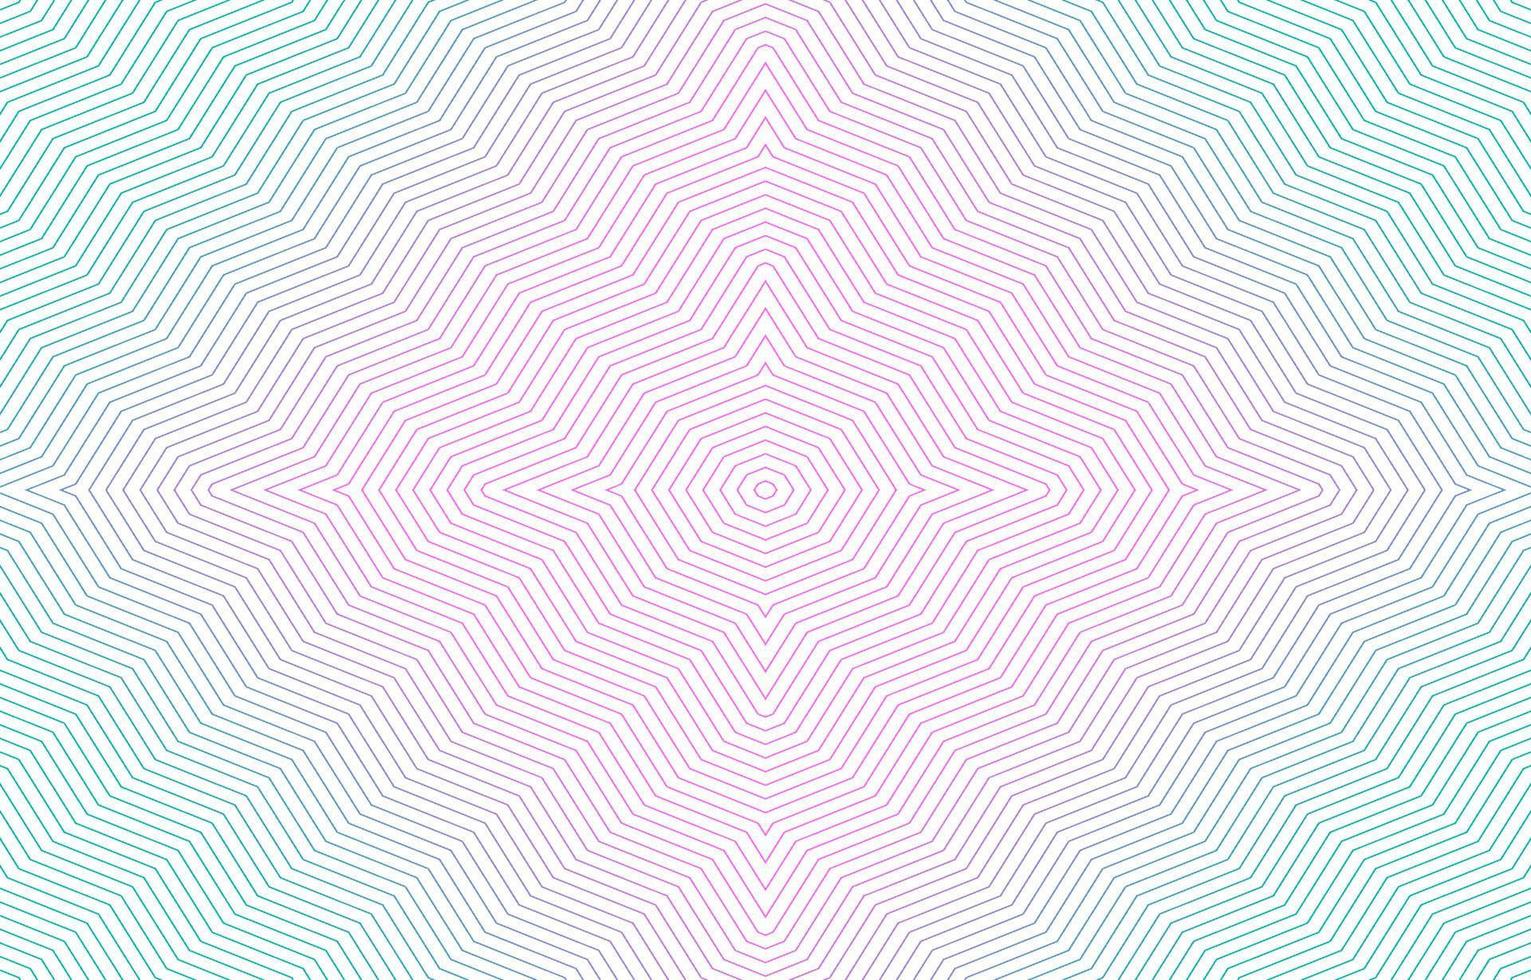 conception de motif en zigzag en diagonale vecteur